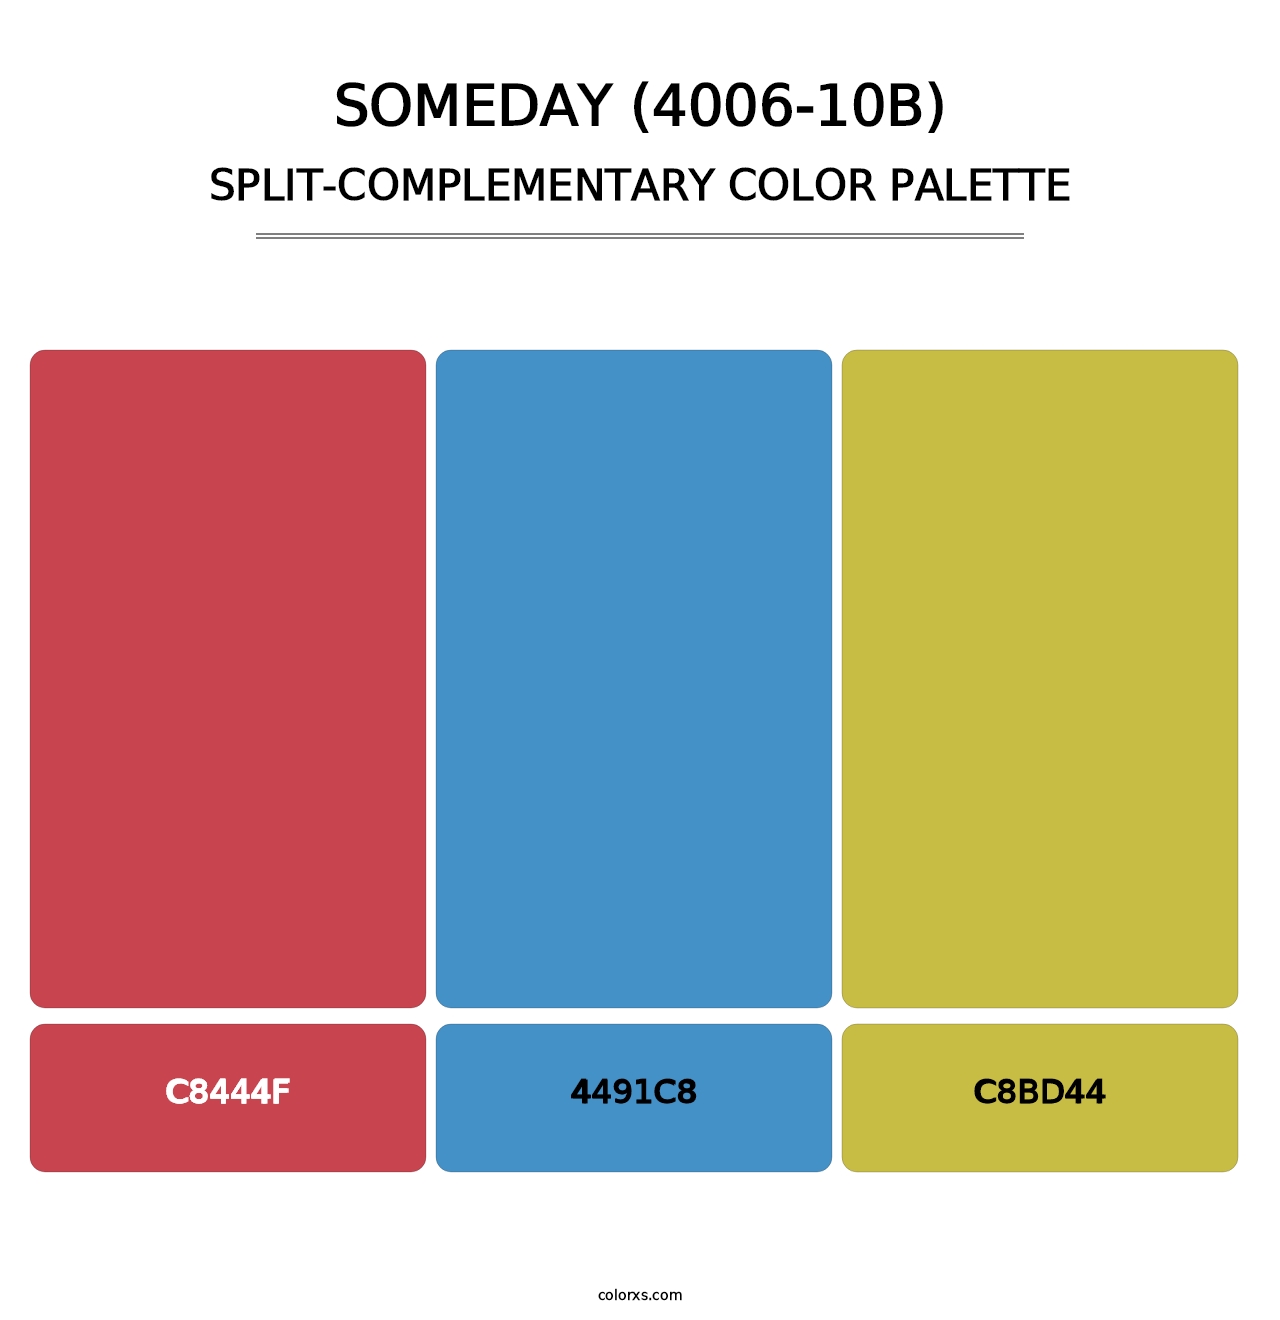 Someday (4006-10B) - Split-Complementary Color Palette